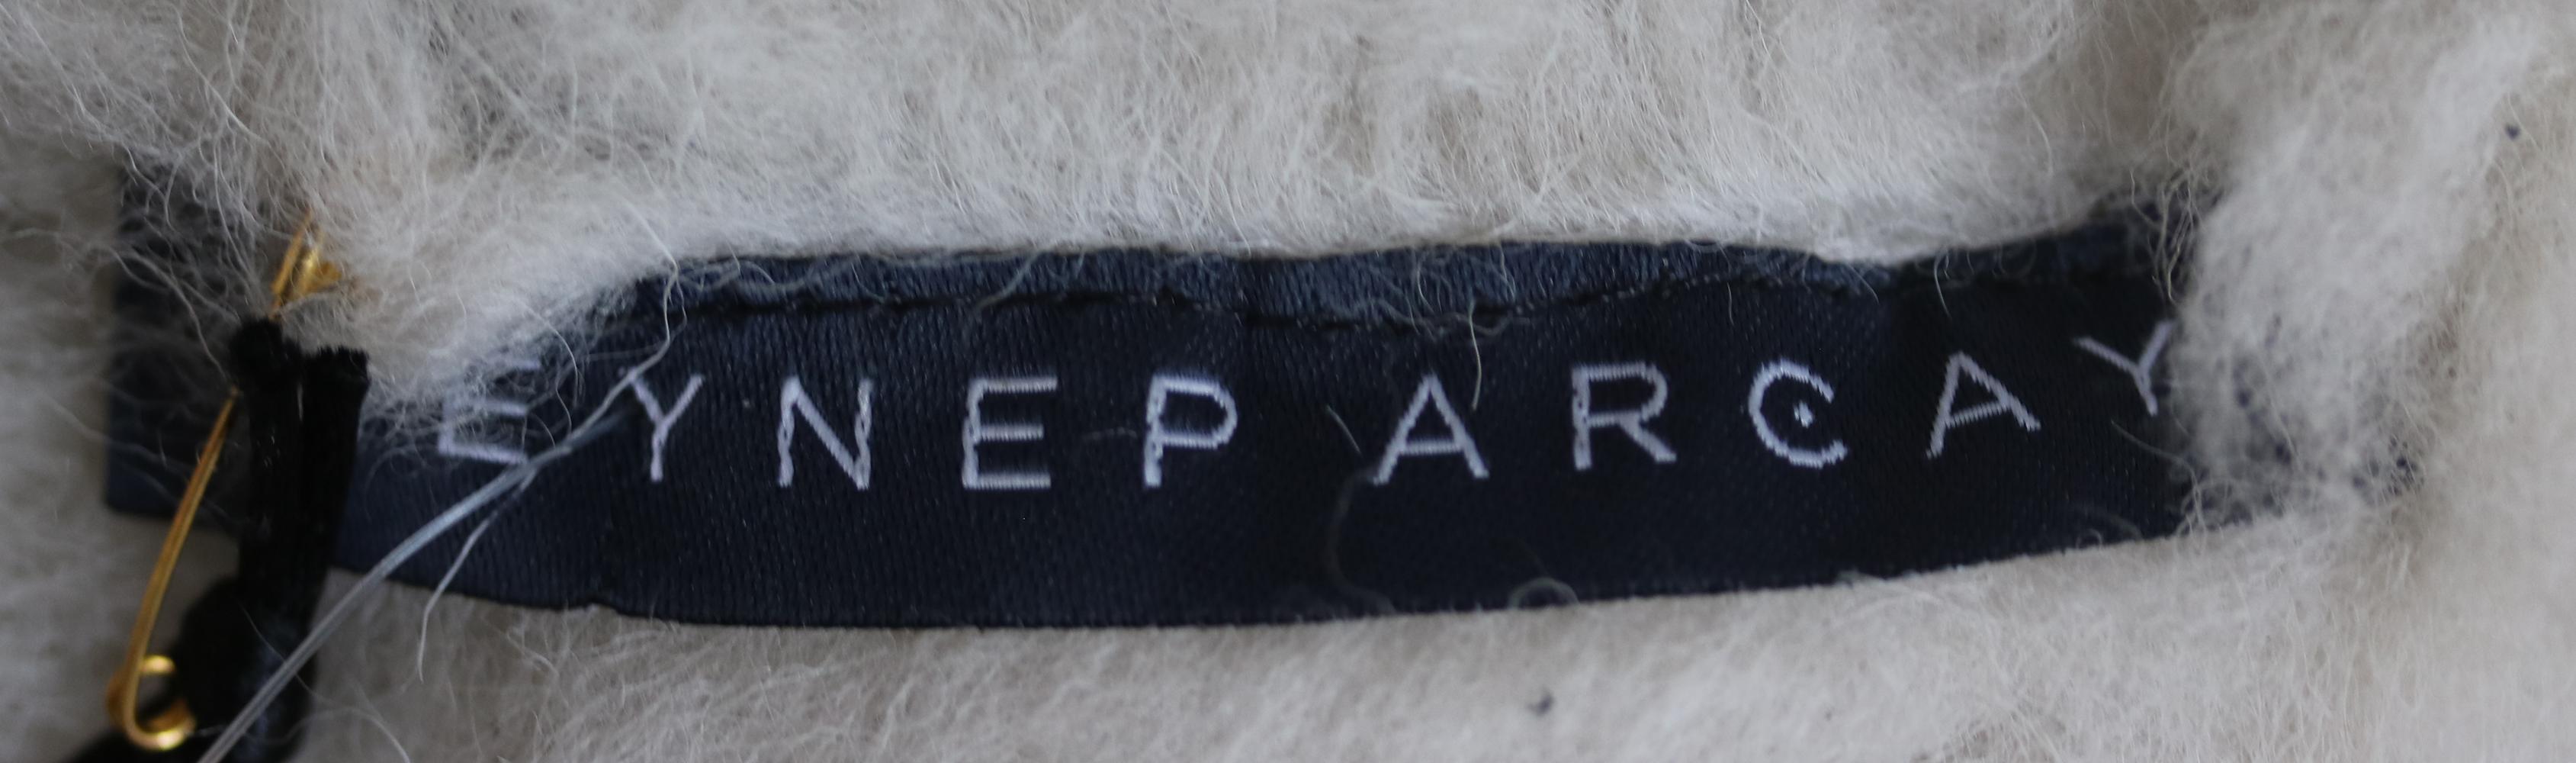 Women's Zeynep Arcay Oversized Shearling Leather Jacket